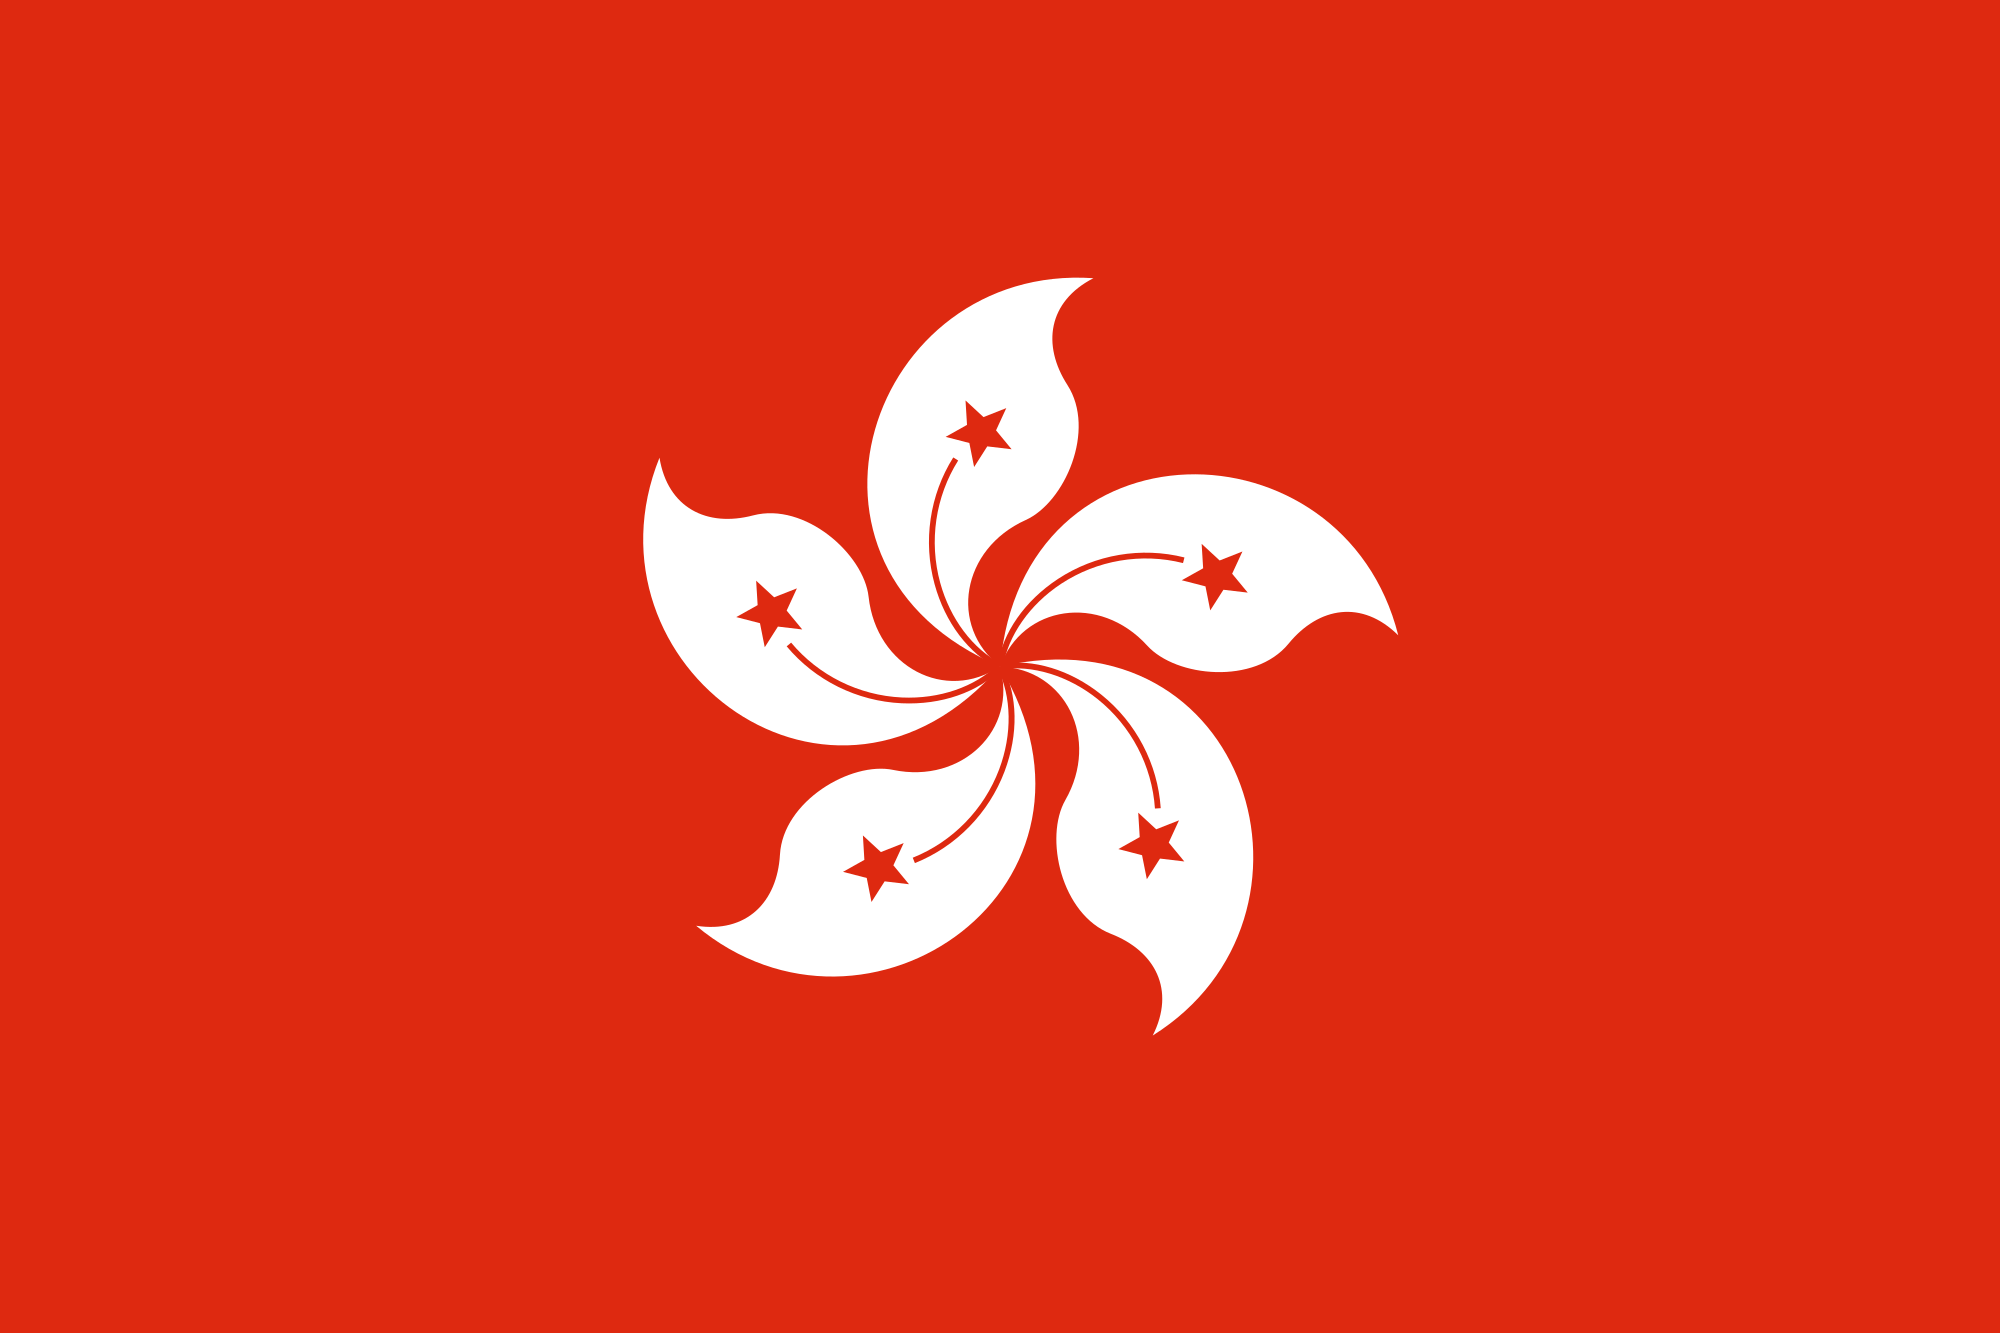 White and Red Star Logo - Flag of Hong Kong